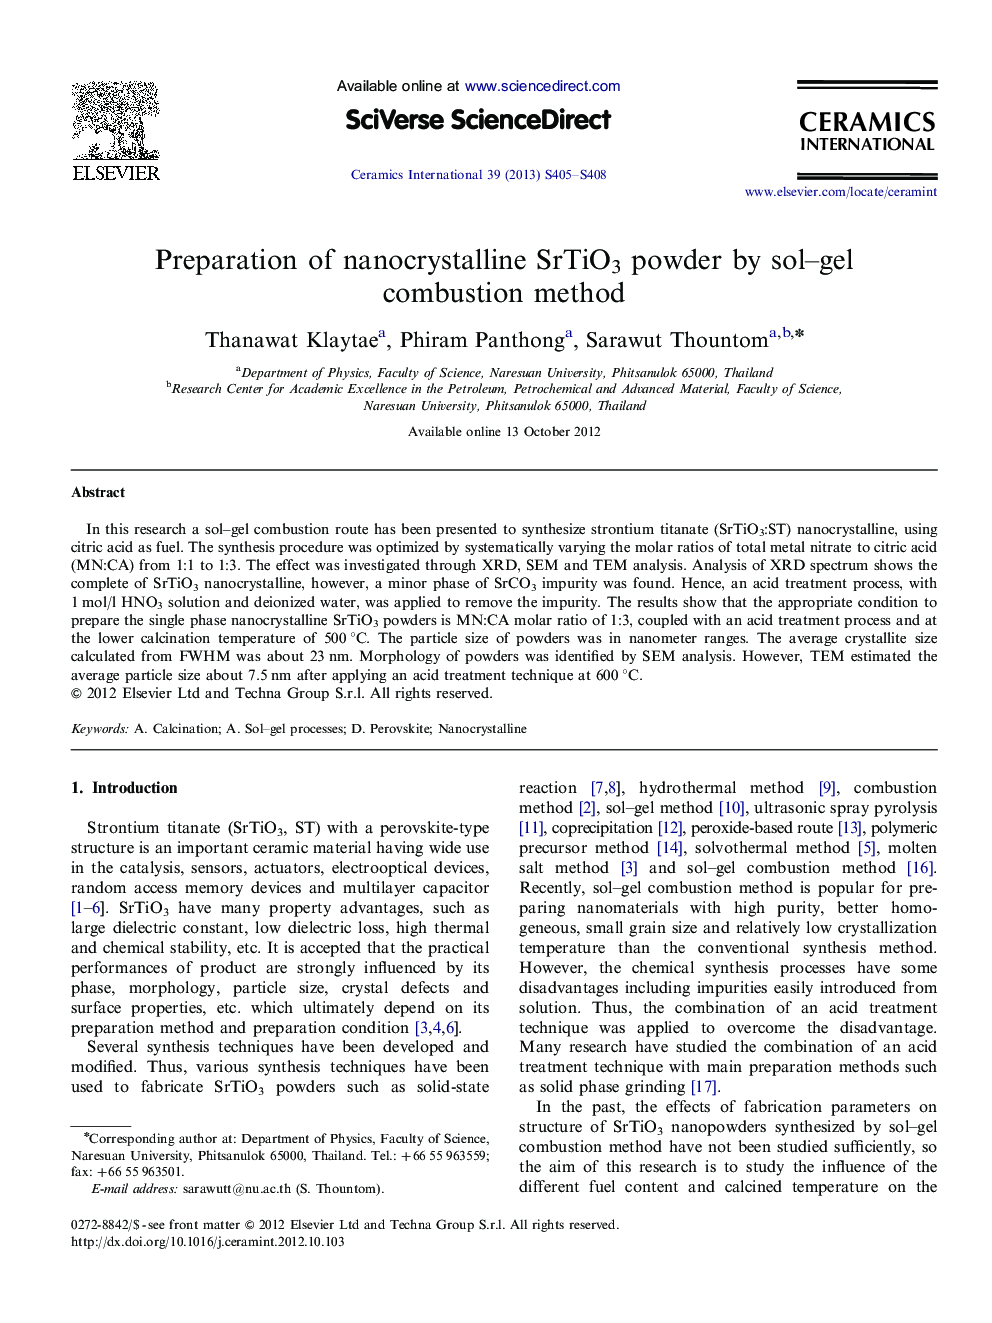 Preparation of nanocrystalline SrTiO3 powder by sol–gel combustion method